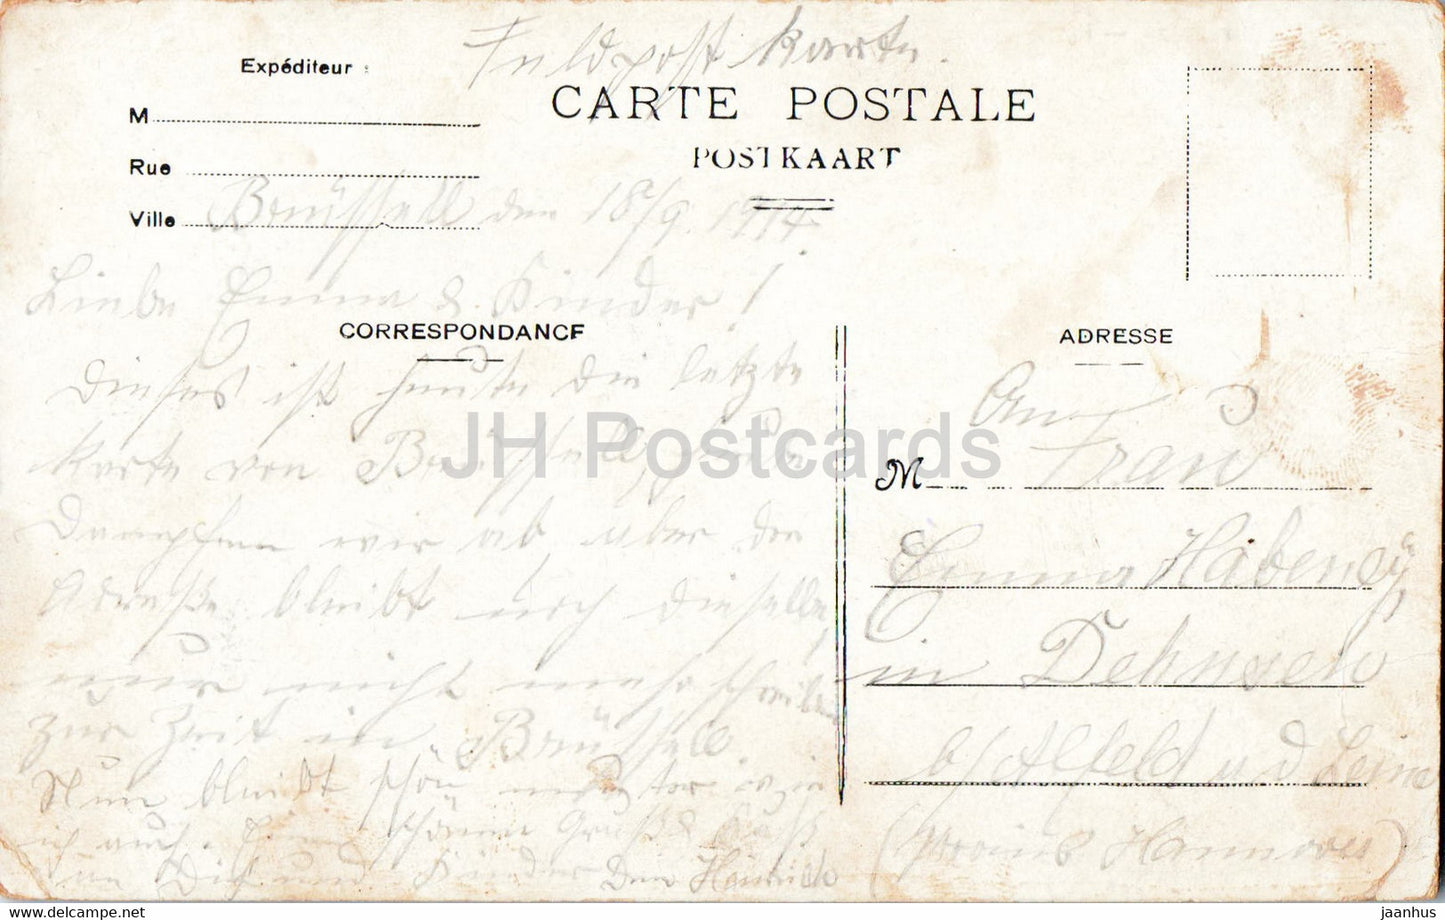 Bruxelles - Brussels - Palais de Justice - old postcard - 1917 - Belgium - used